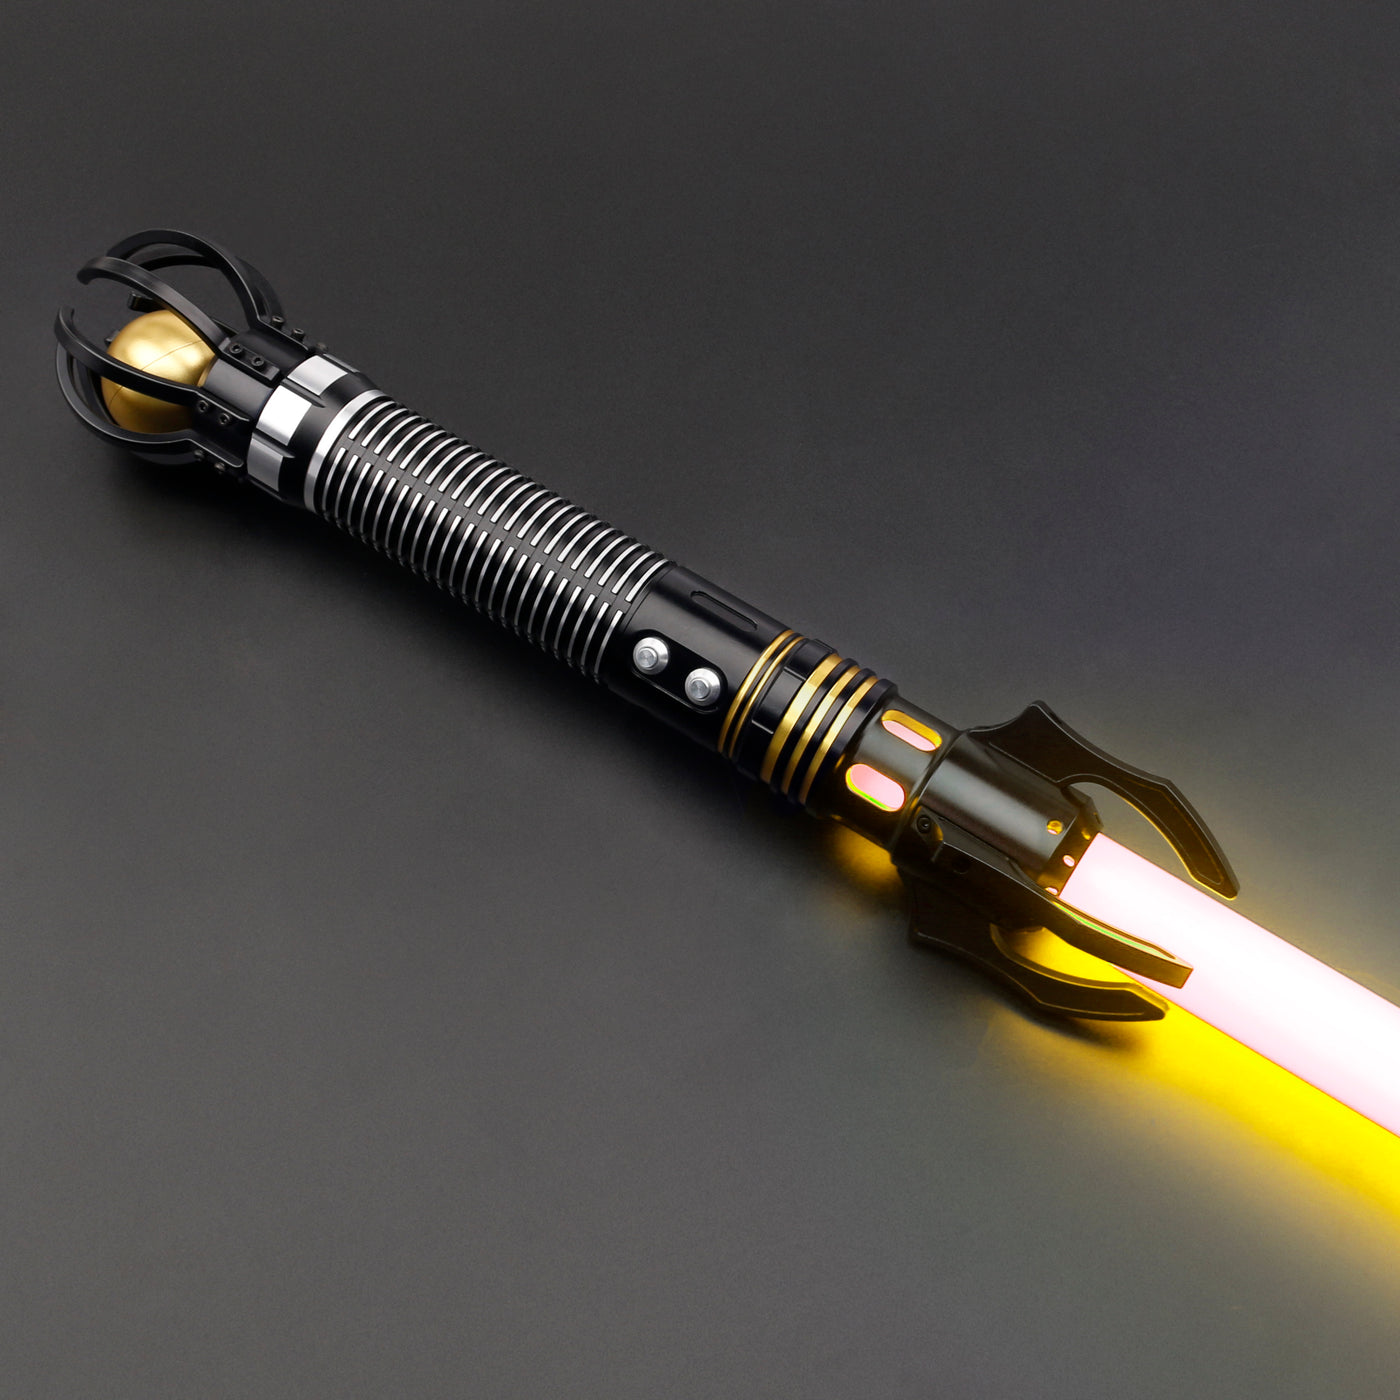 Cosmic Strike - KenJo Sabers - Premium RGB Baselit - Star Wars Lightsaber replica Jedi Sith - Best sabershop Europe - Nederland light sabers kopen -